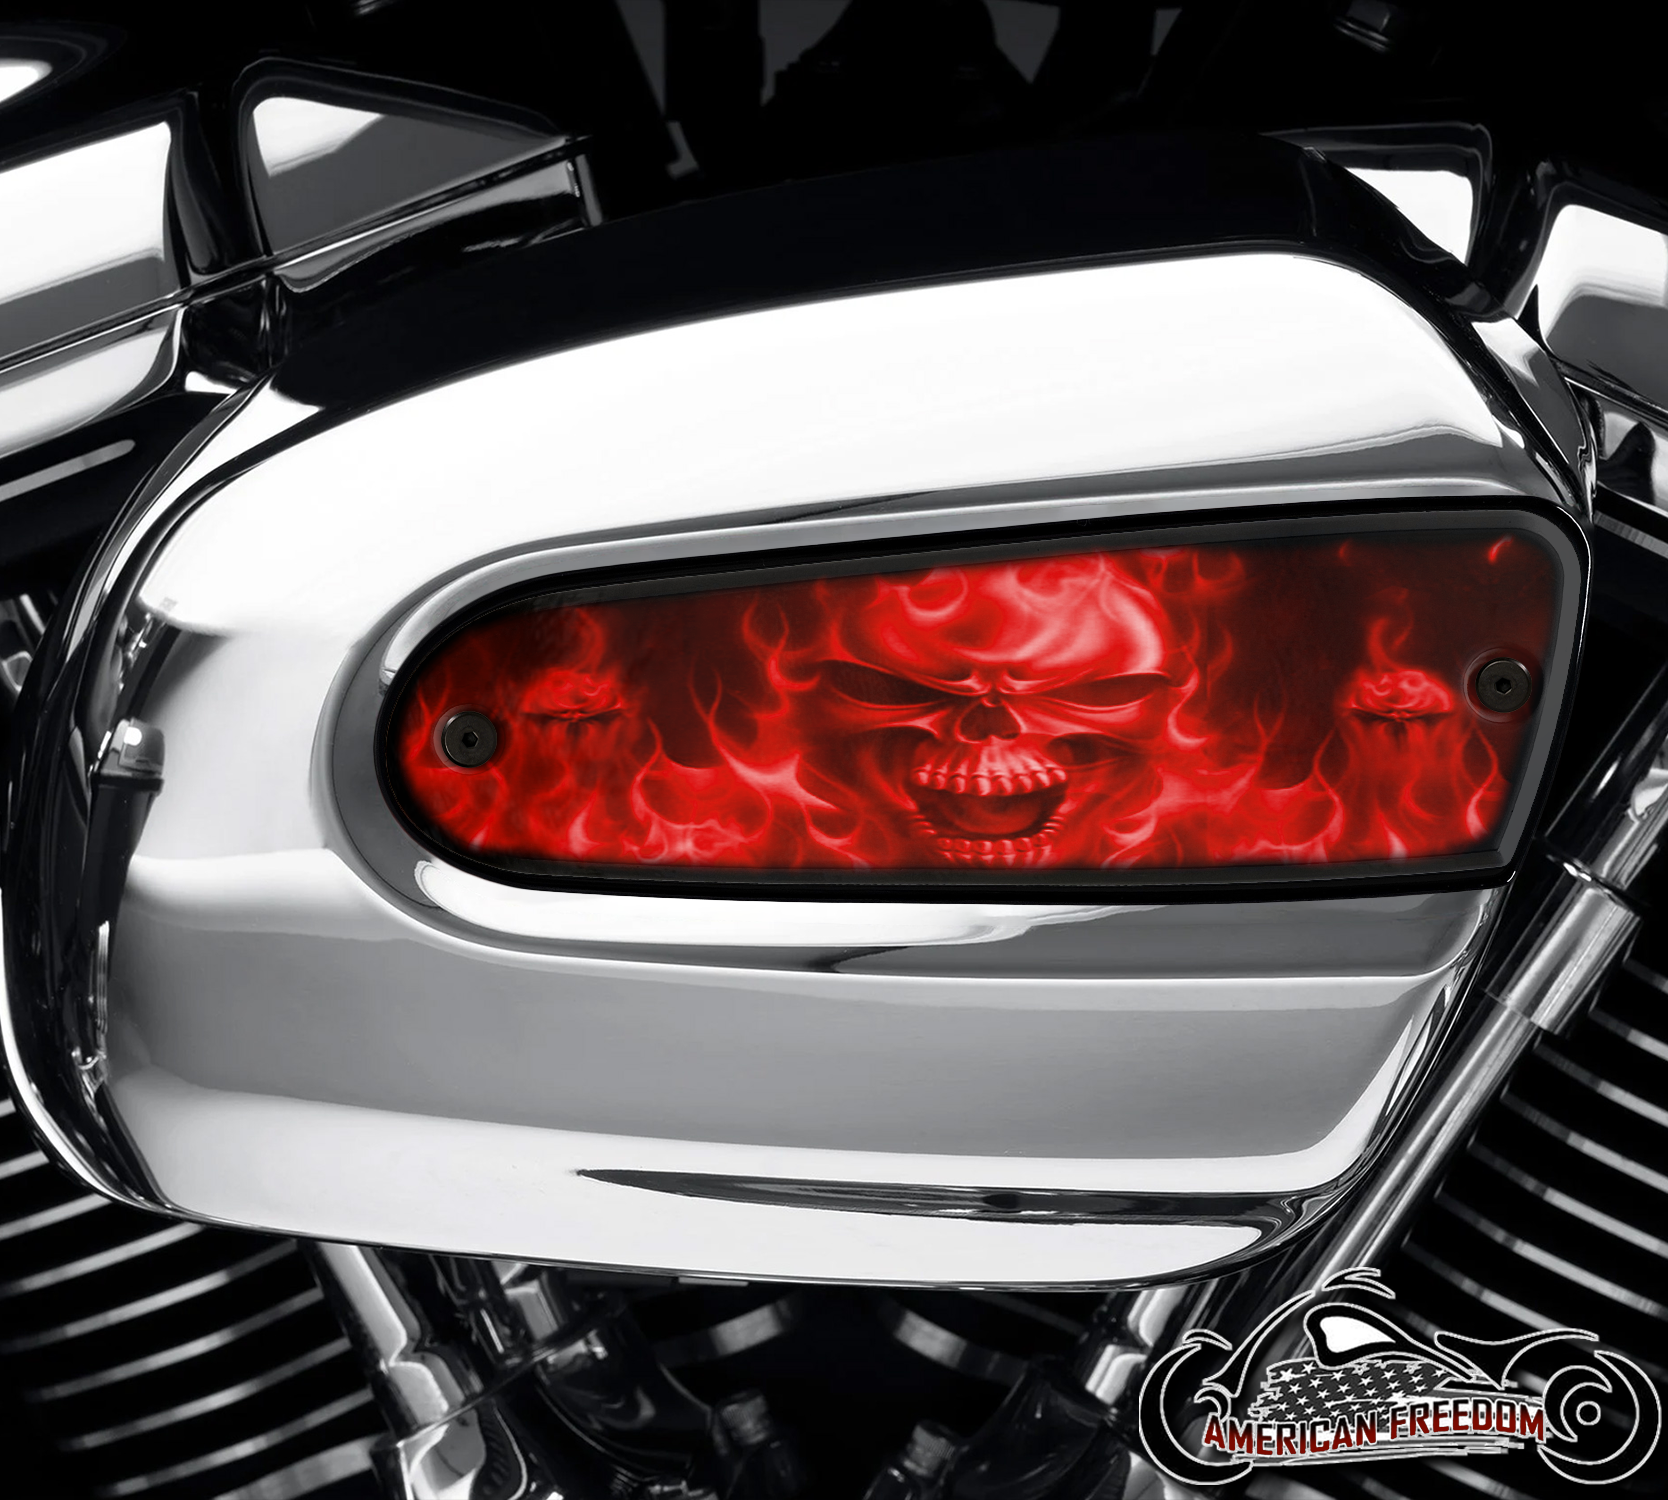 Harley Davidson Wedge Air Cleaner Insert - Red Flame Skull